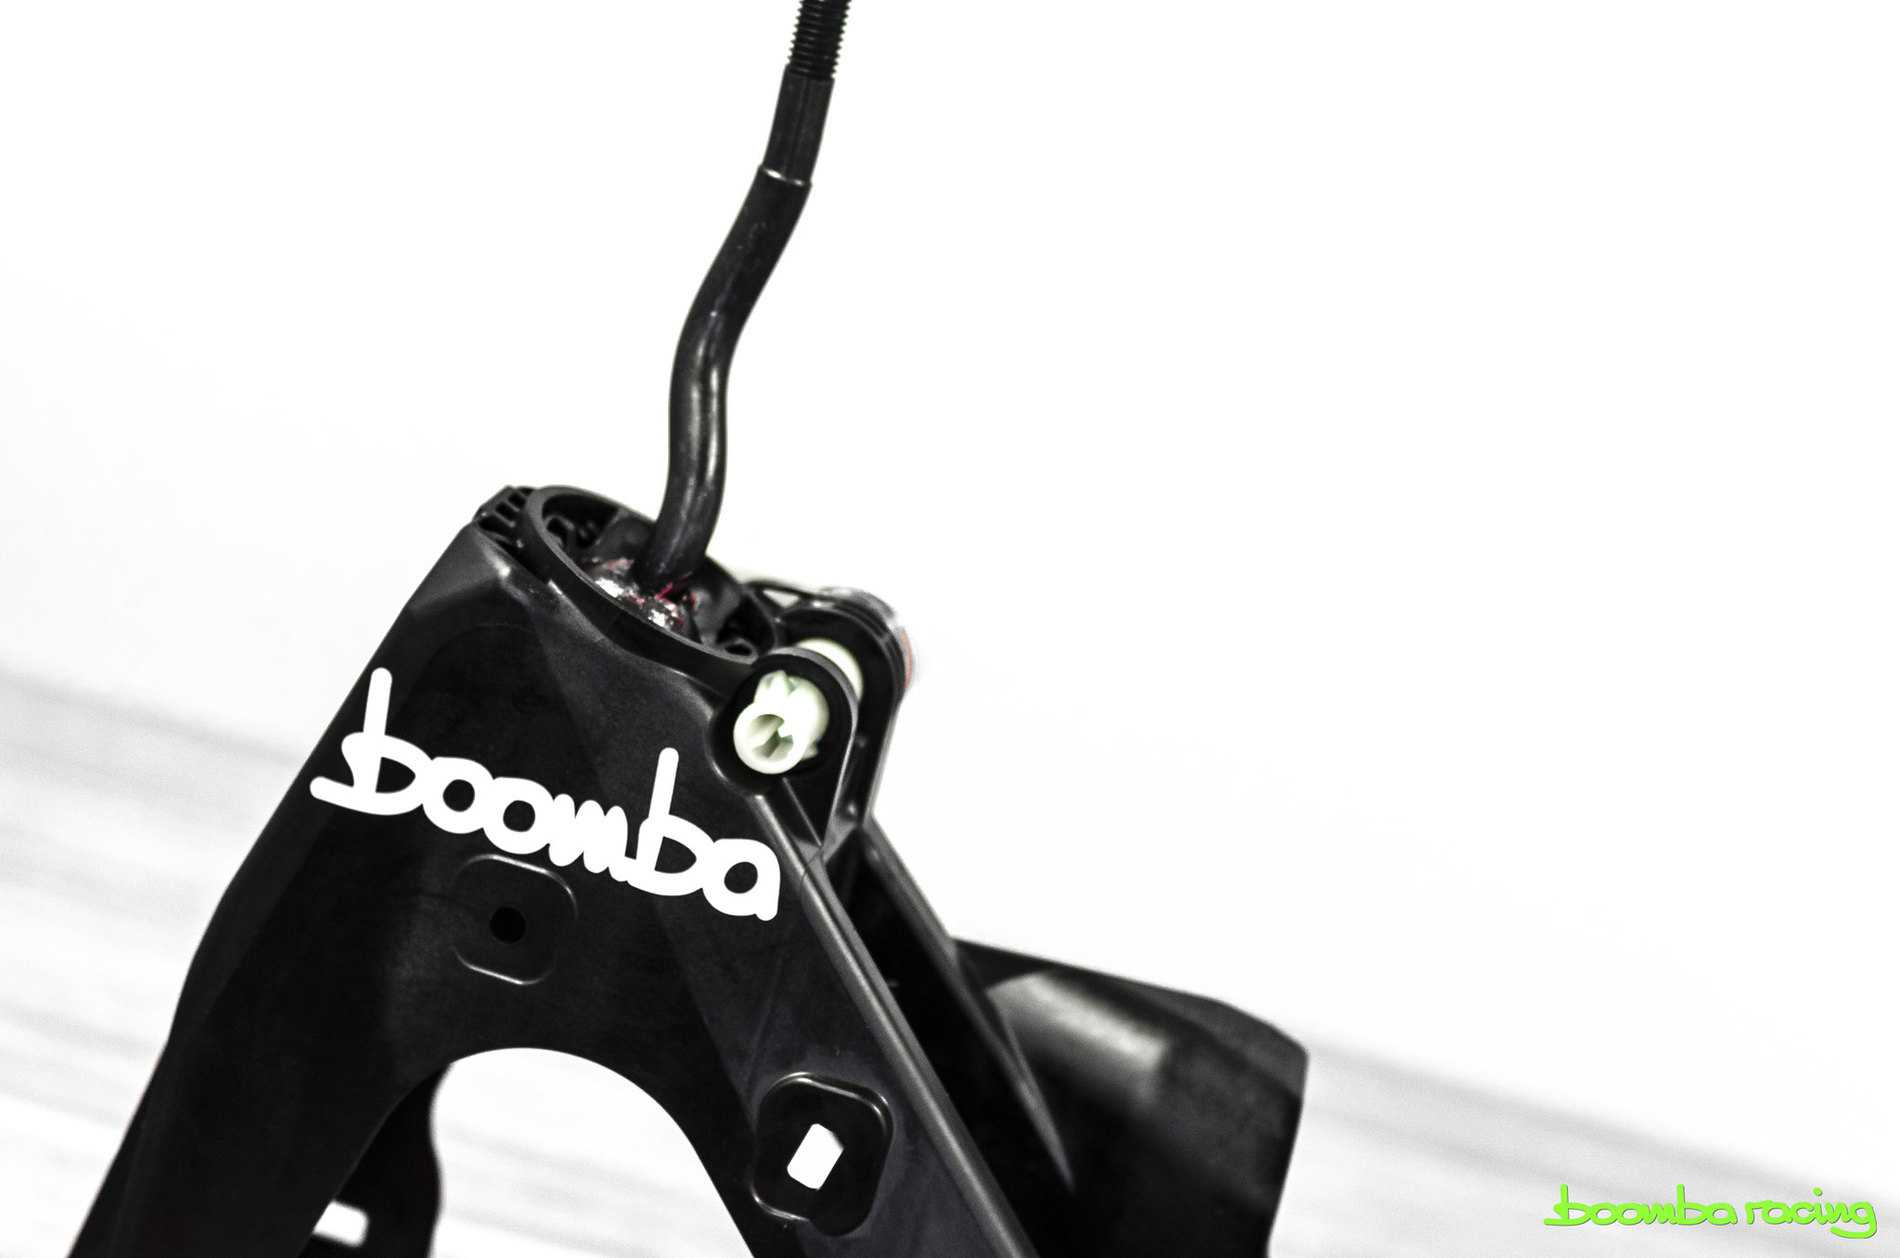 11th Gen Honda Civic Full Replacement Short Shift Assembly - Boomba Racing 47923752171_e94df961bb_k